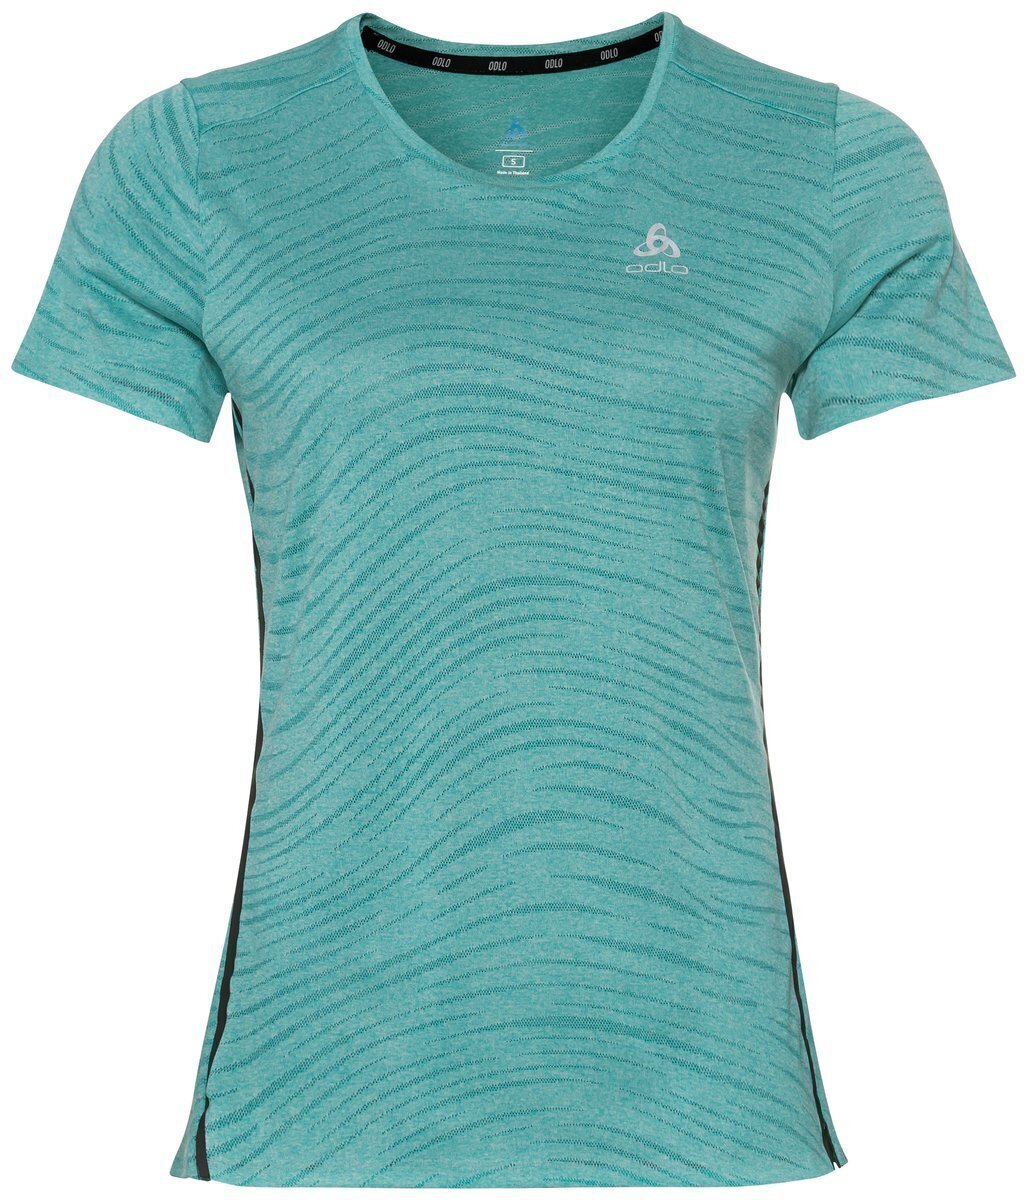 Běžecké tričko s krátkým rukávem
 Odlo Zeroweight Engineered Chill-Tec T-Shirt Jaded Melange M Běžecké tričko s krátkým rukávem